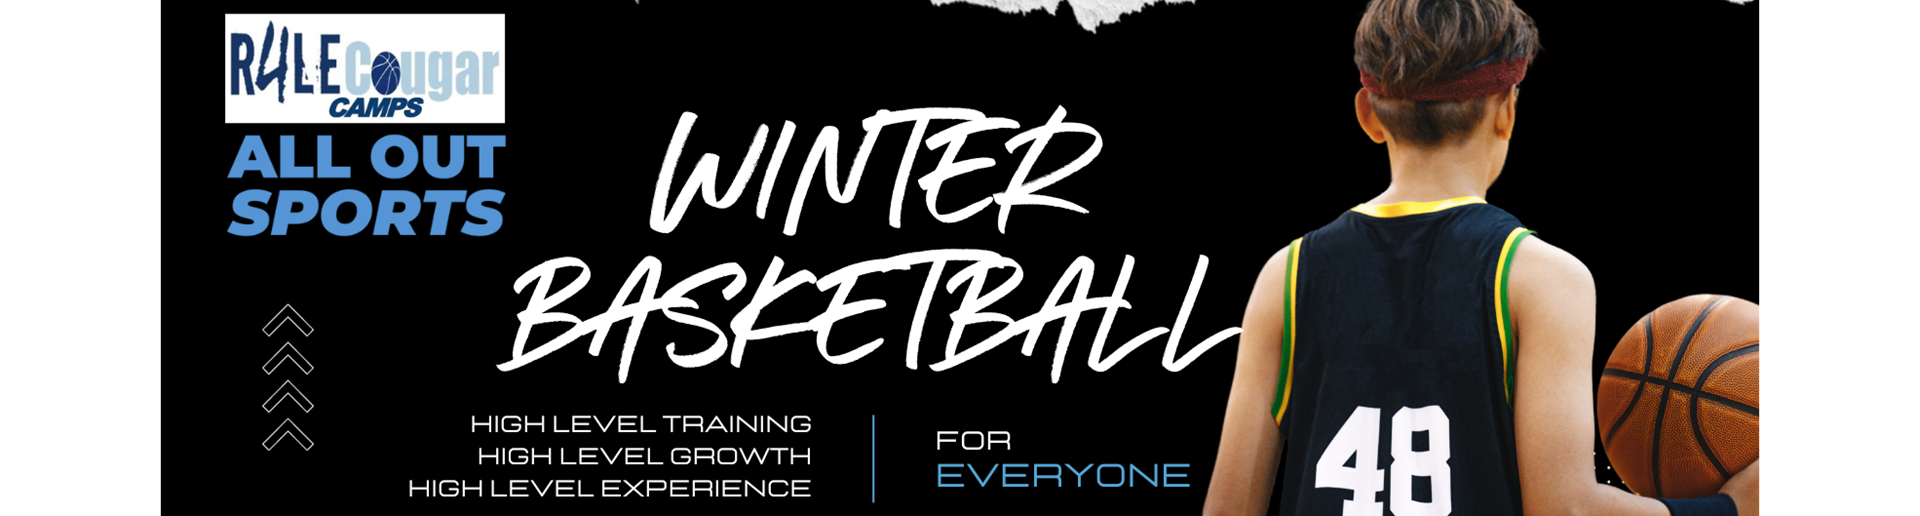 Winter Basketball - Register Today!